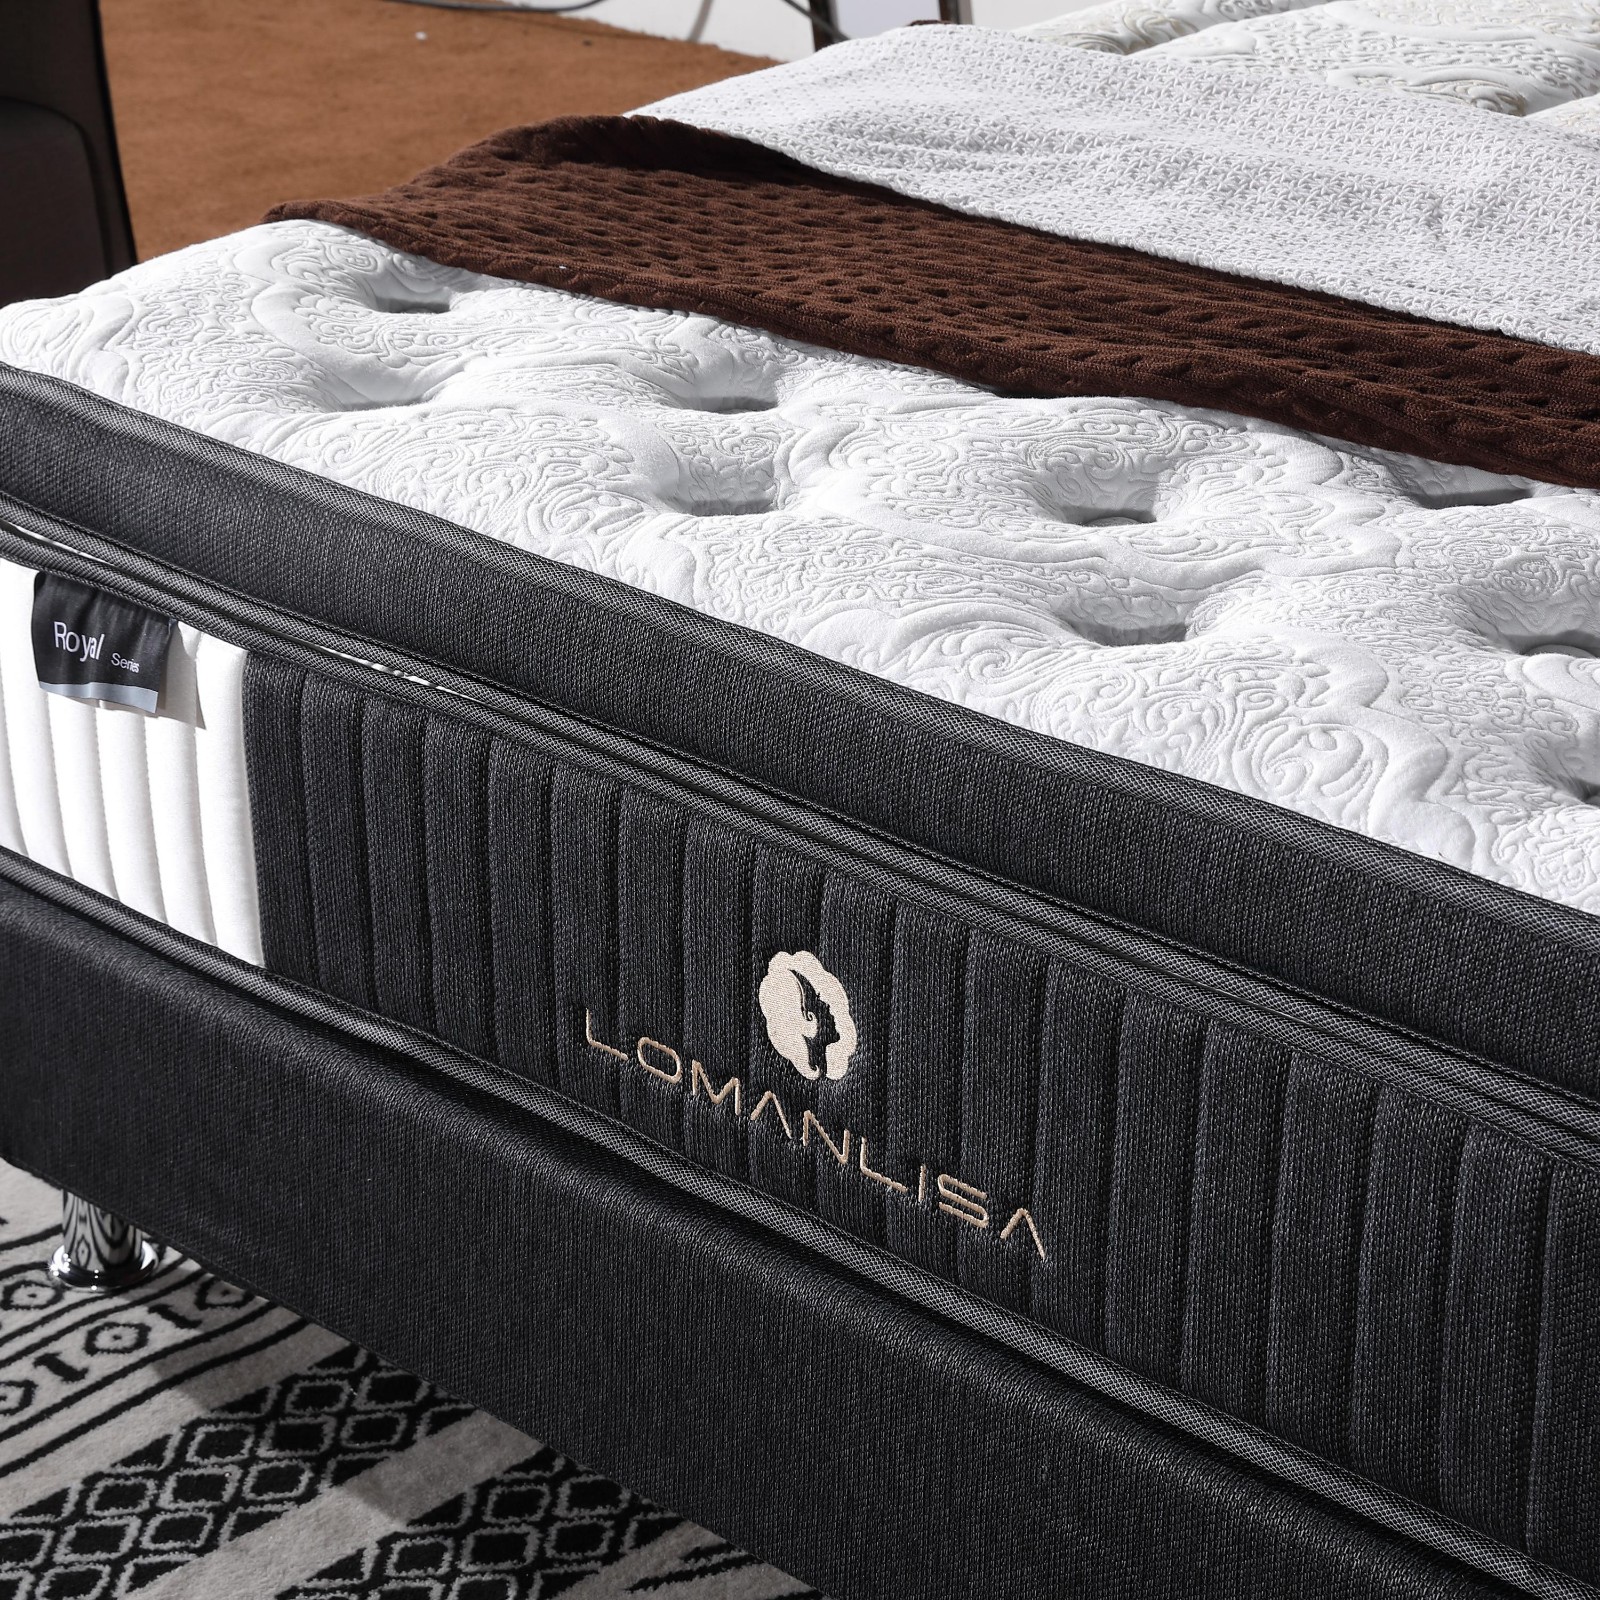 JLH best wool mattress topper Certified for bedroom-17